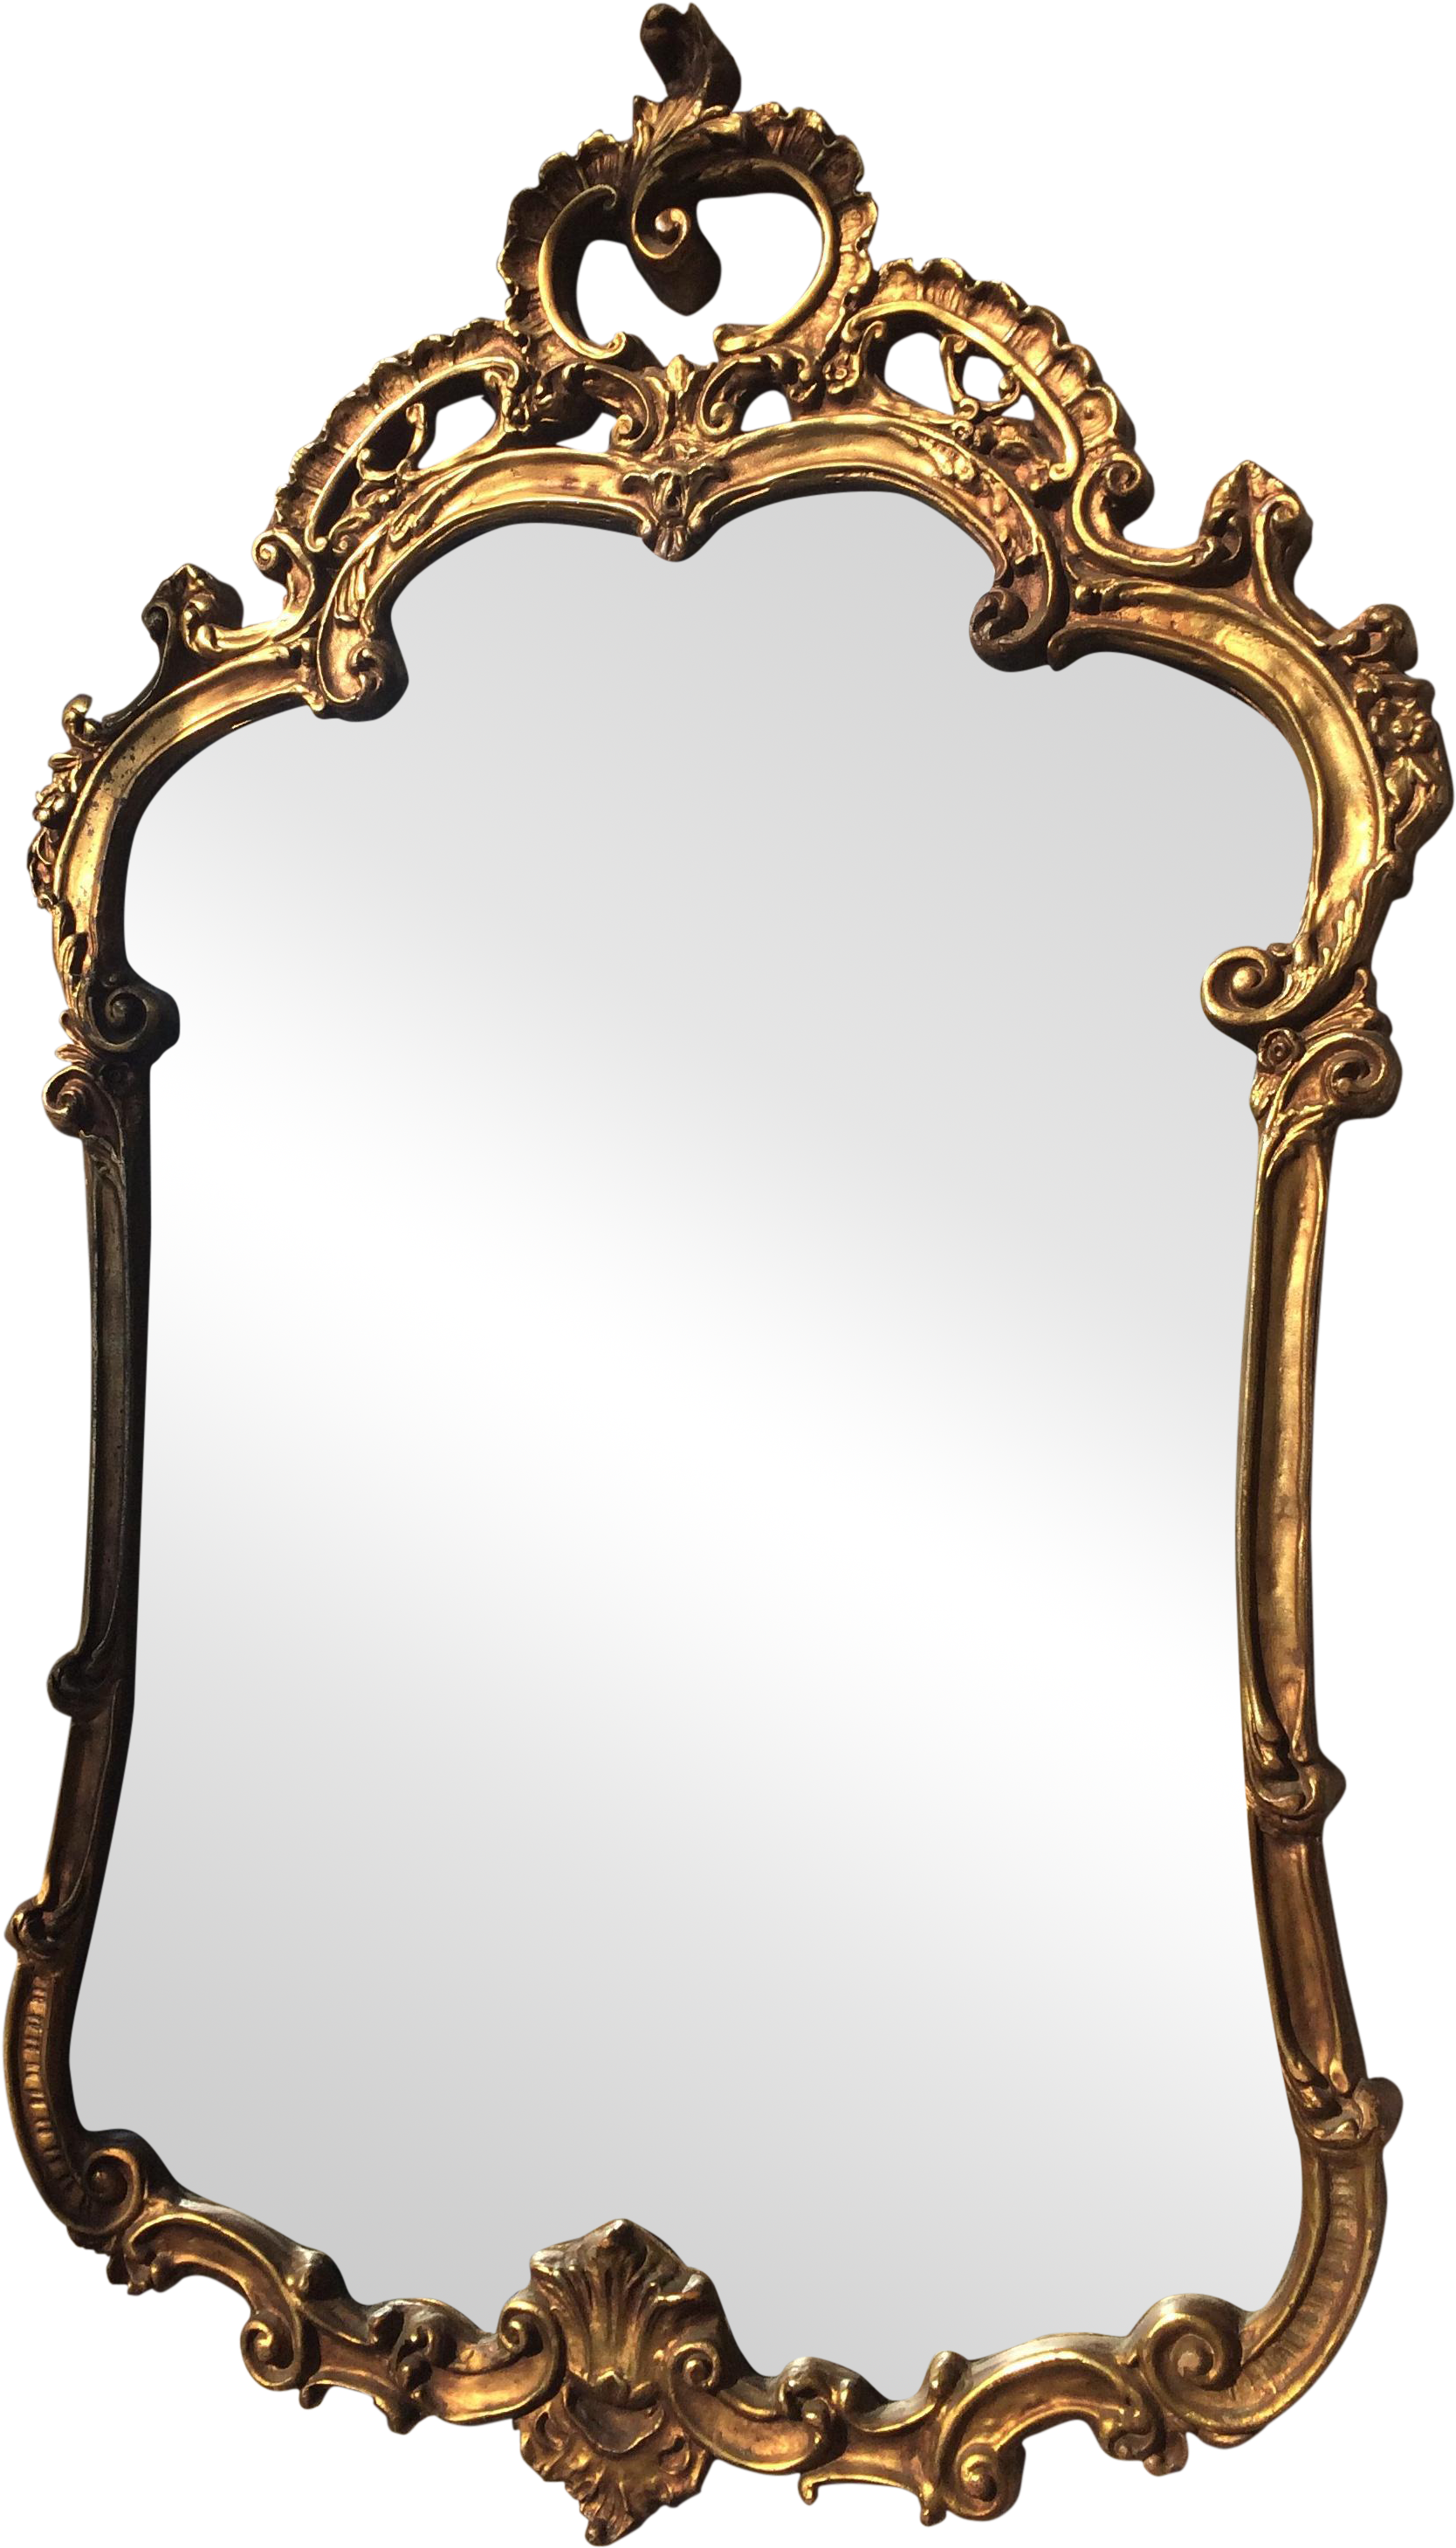 Mirror Clip art - Mirror PNG Transparent Images png download - 1895*